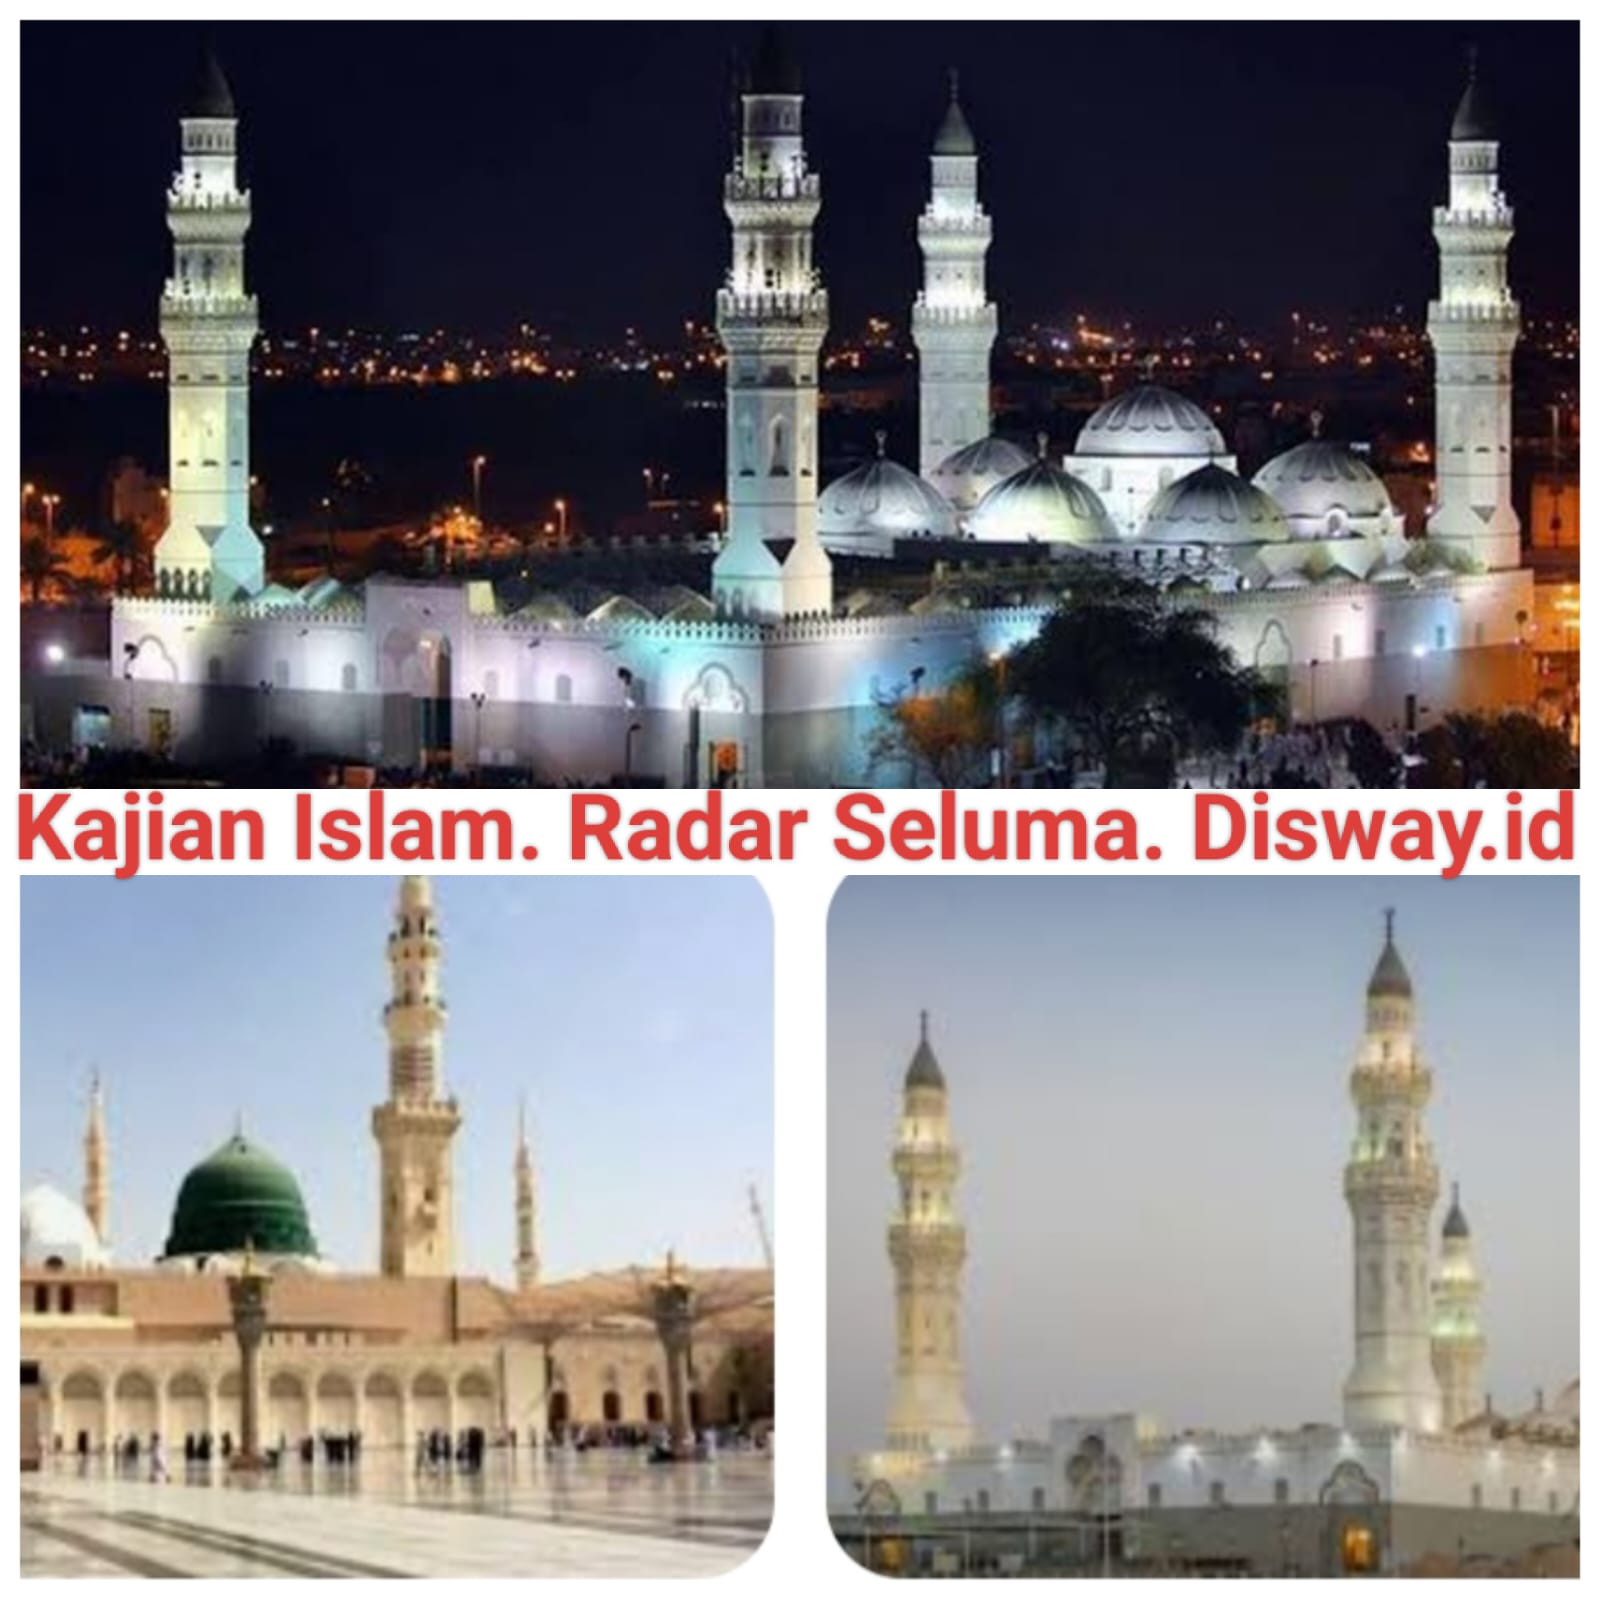 10 Masjid Peninggalan Nabi Muhammad SAW. Ini Faktanya Yuk Simak (Part 2)